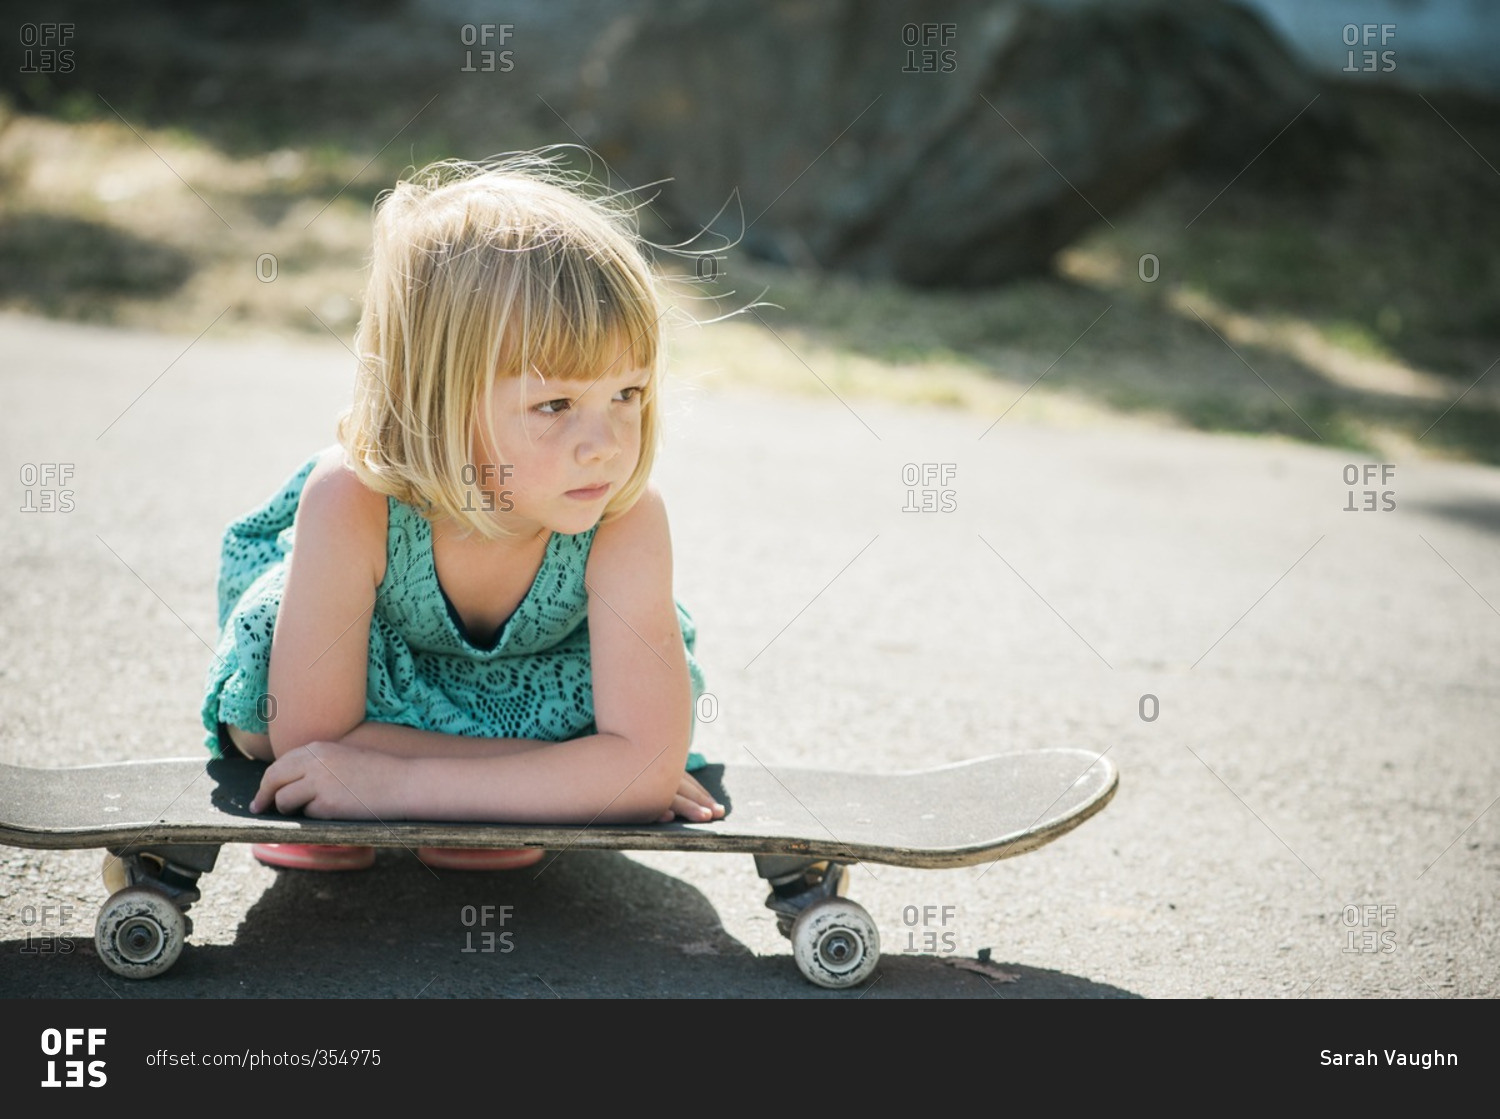 Little girl resting on a skateboard in street